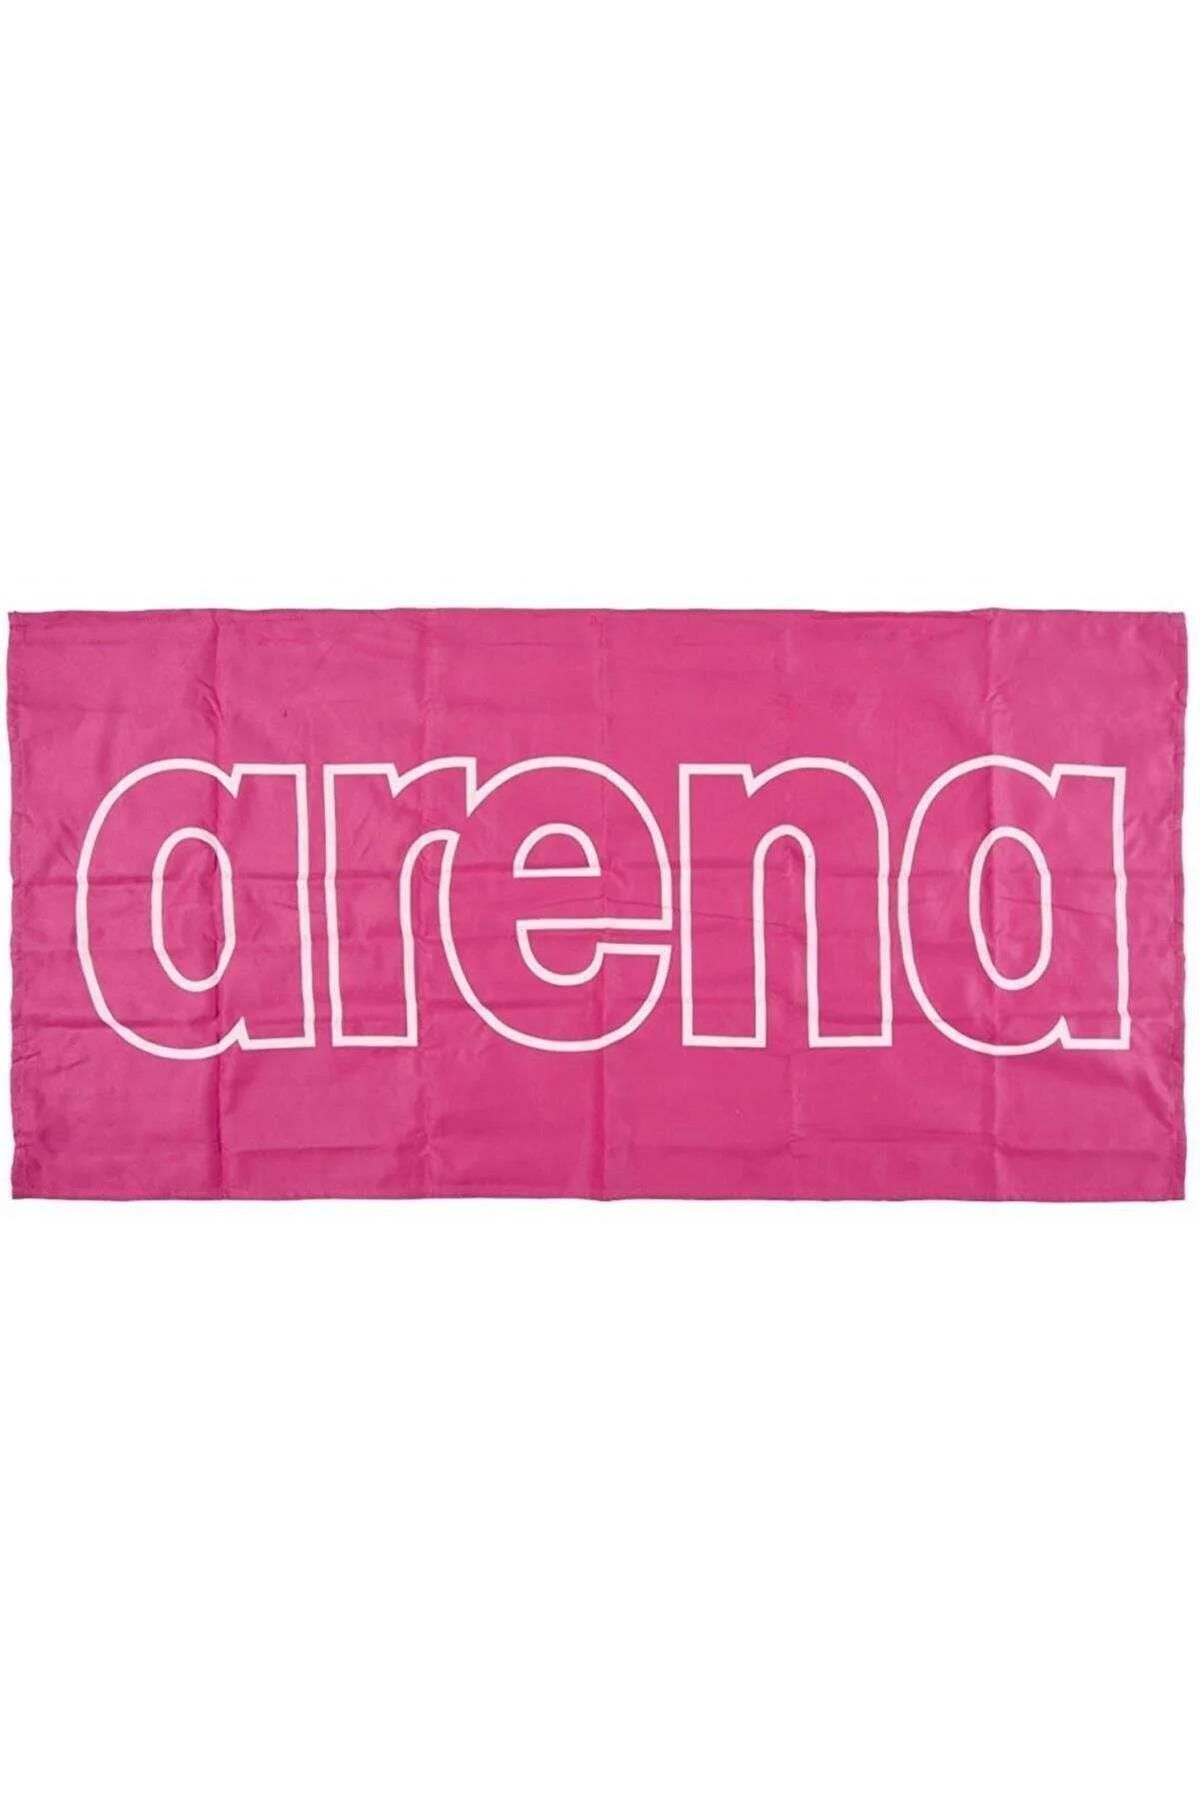 Arena 001992910 Gym Smart Towel Çocuk Havlu